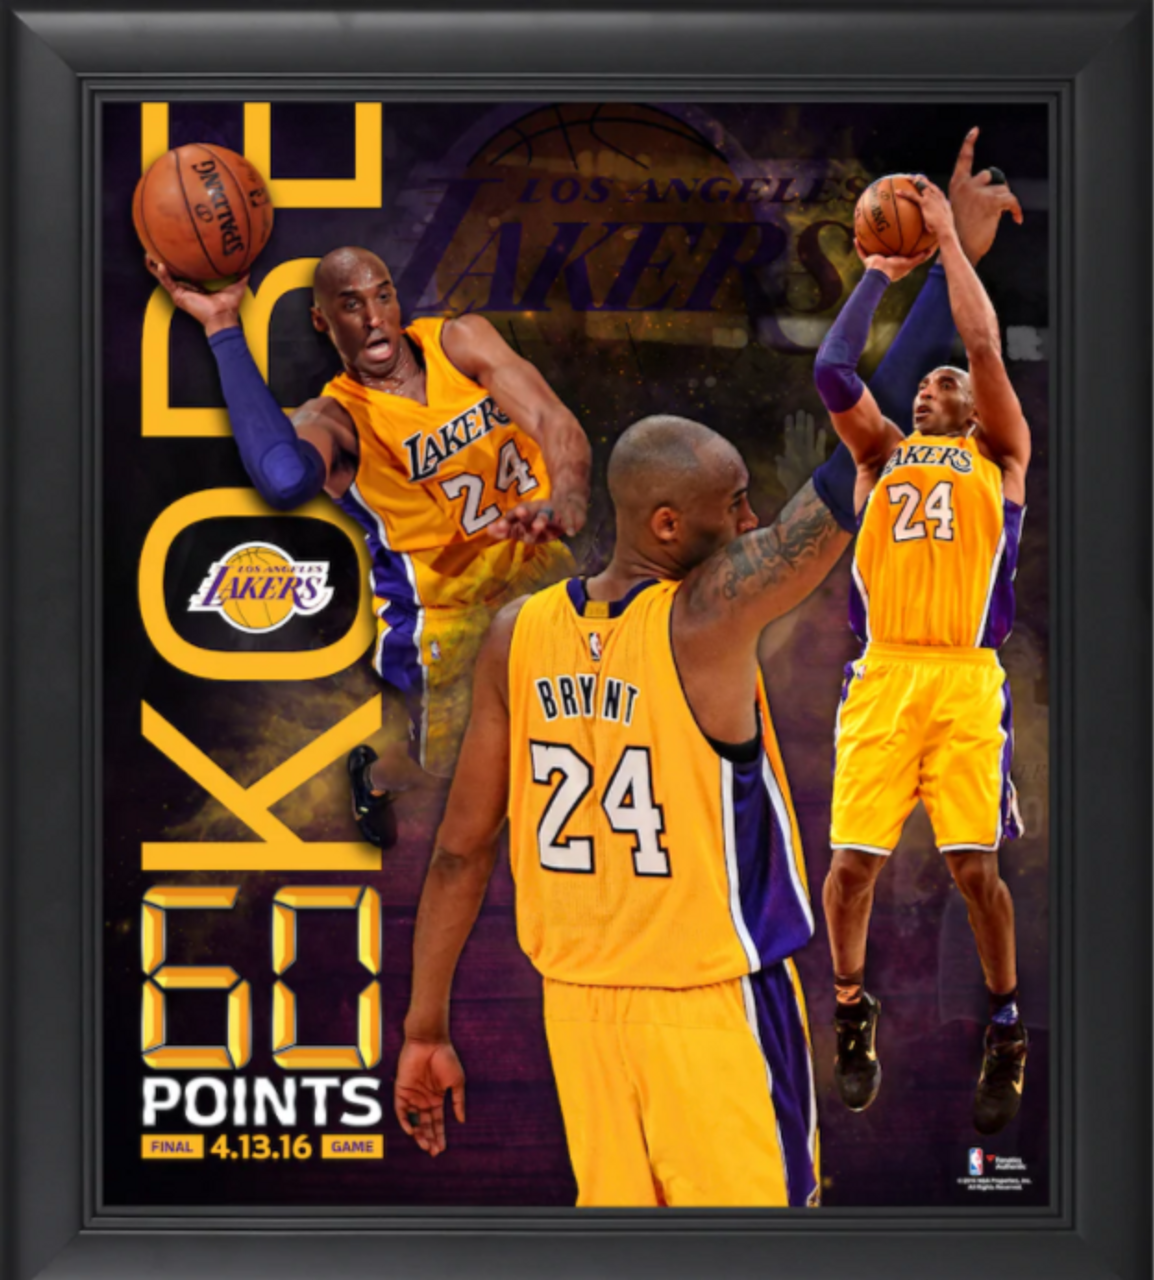 Los Angeles Lakers Black Framed Team Logo Jersey Display Case